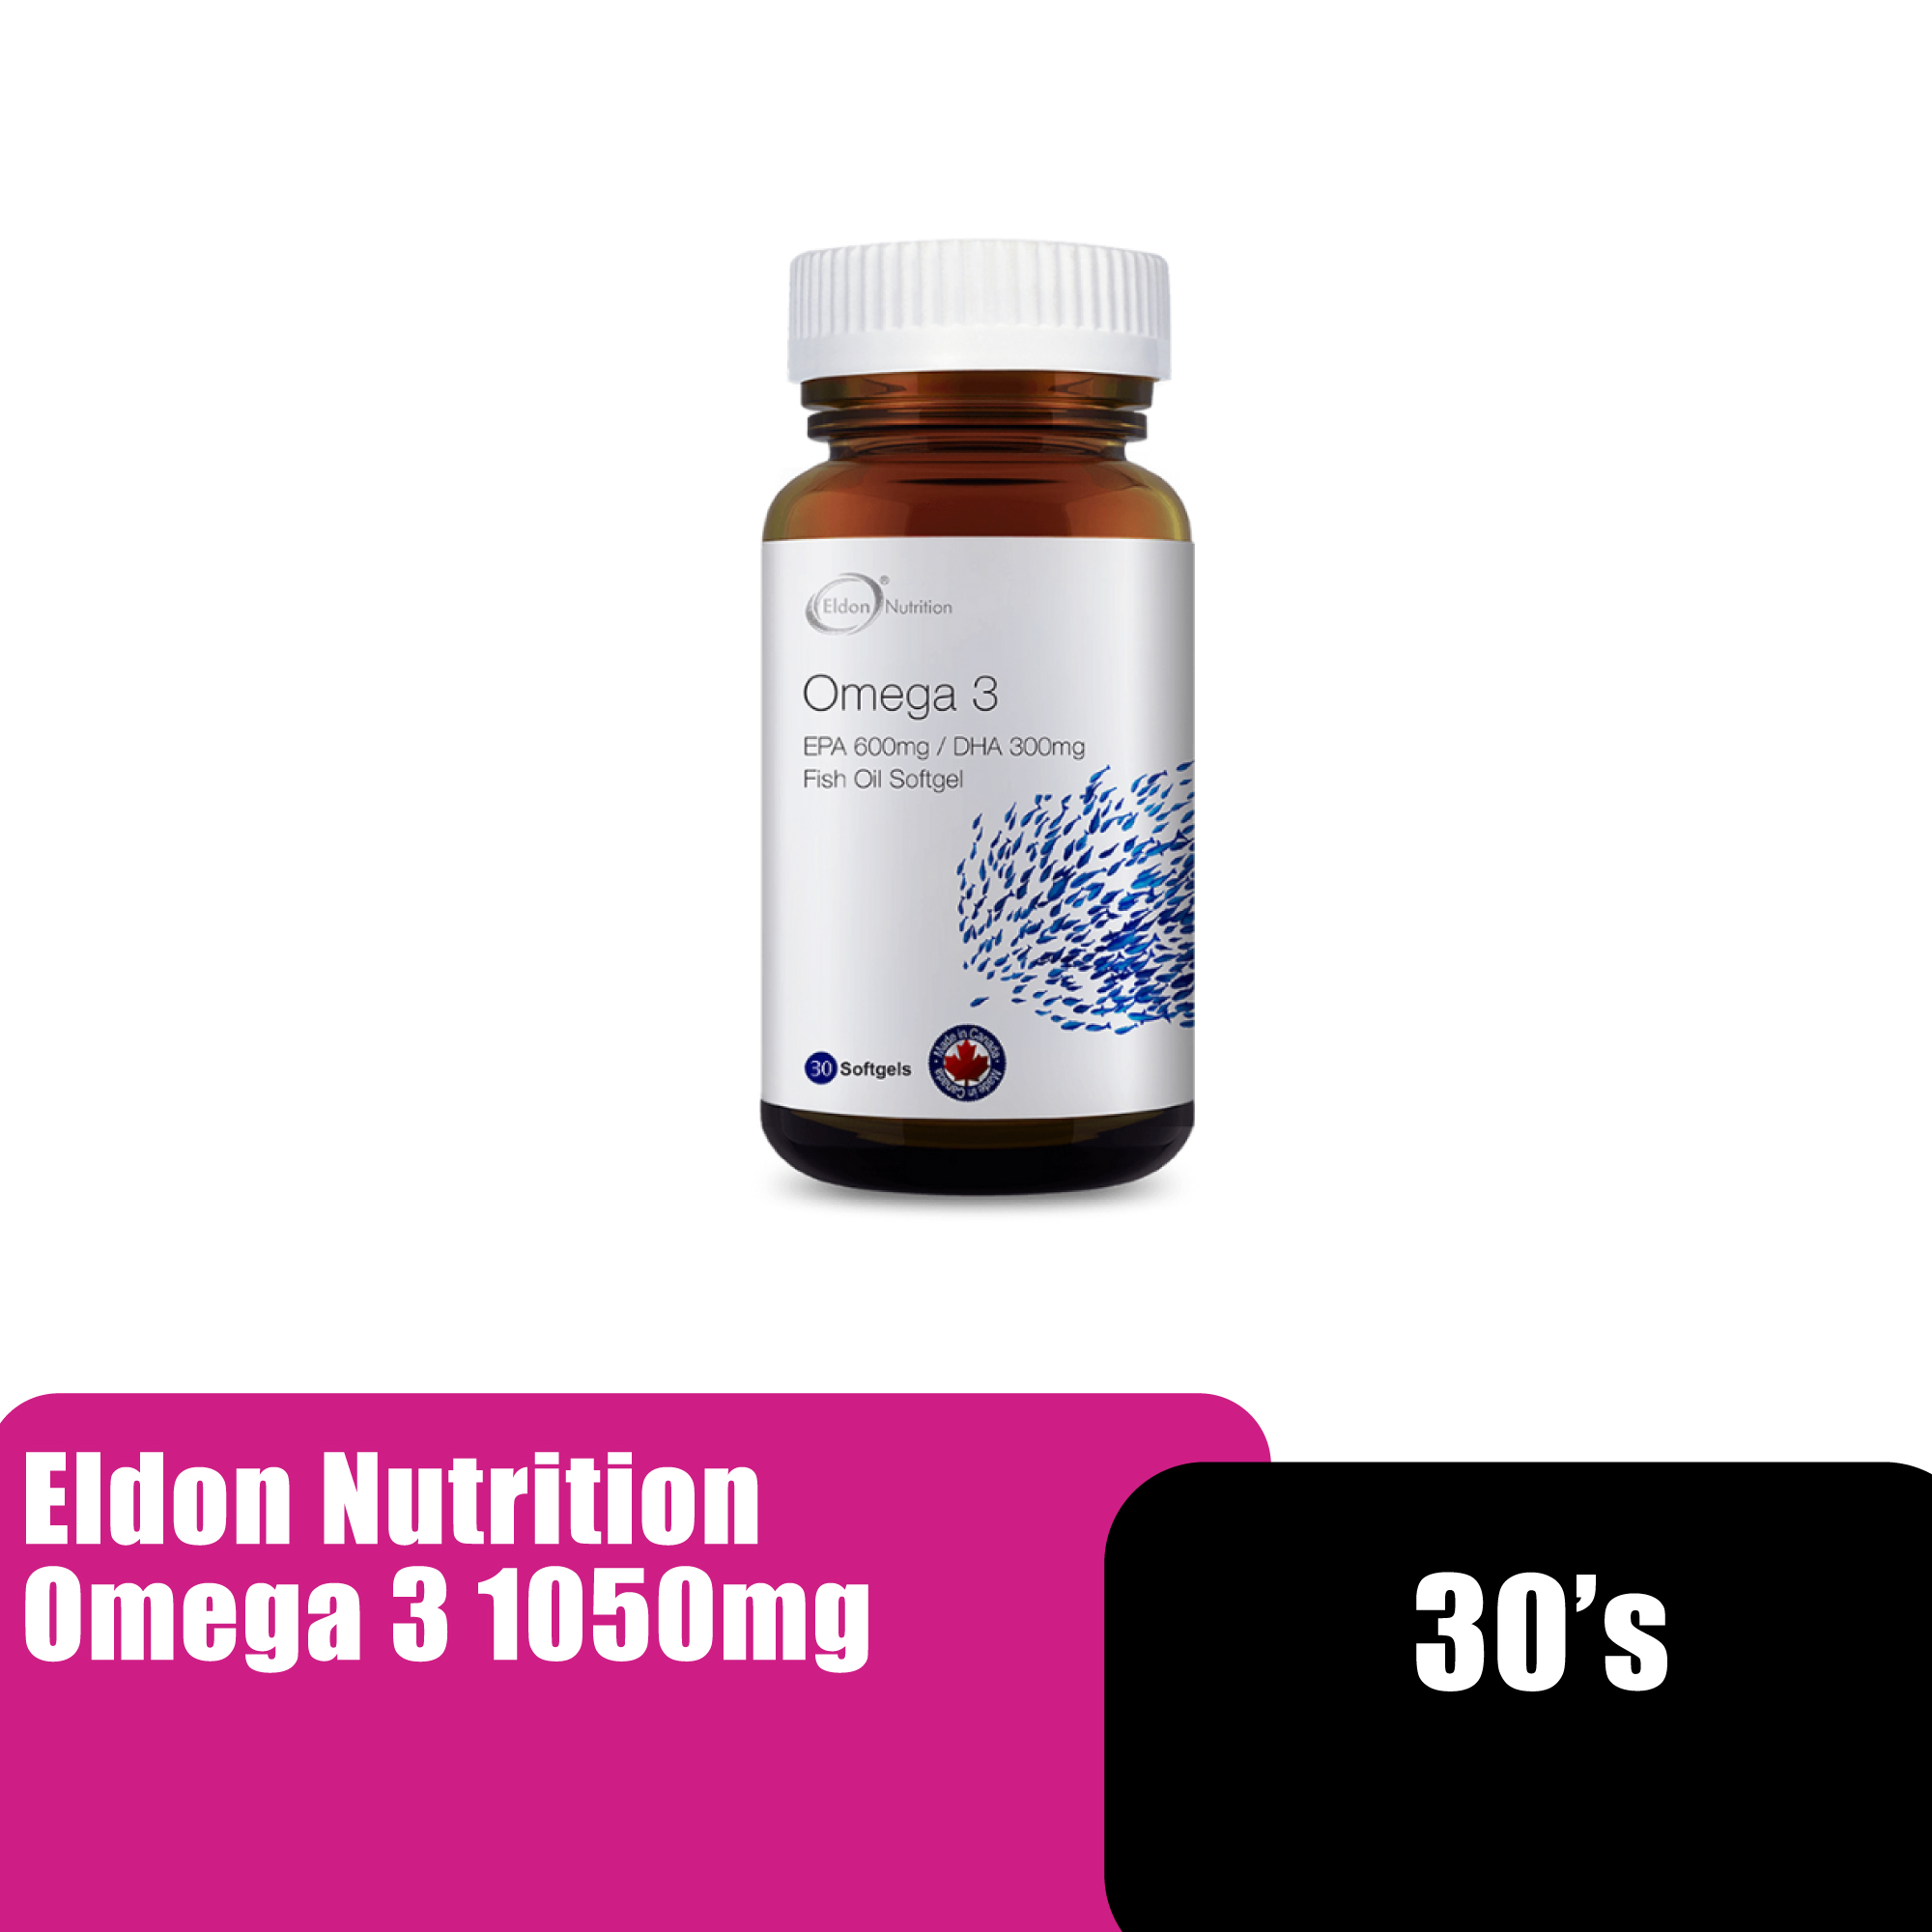 Elldon Nutrition Omega 3 Fish Oil Supplement, Memory Booster Brain Supplement, Heart Supplement (补脑) (1050mg x 30's)